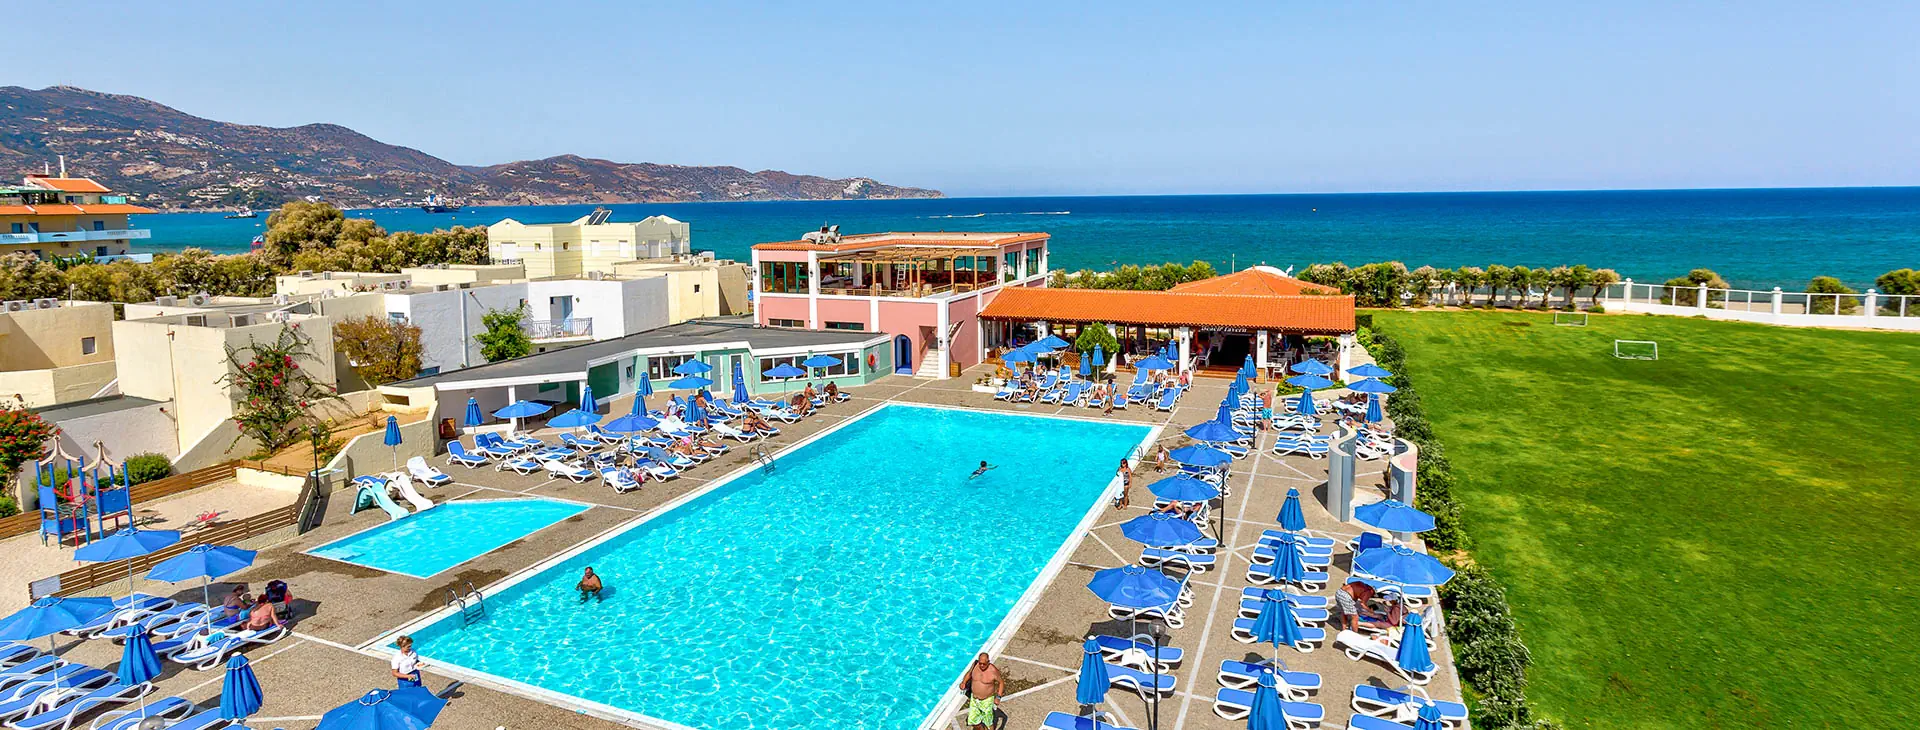 Grecja Kreta Wschodnia Ammoudara Dessole Dolphin Bay Resort